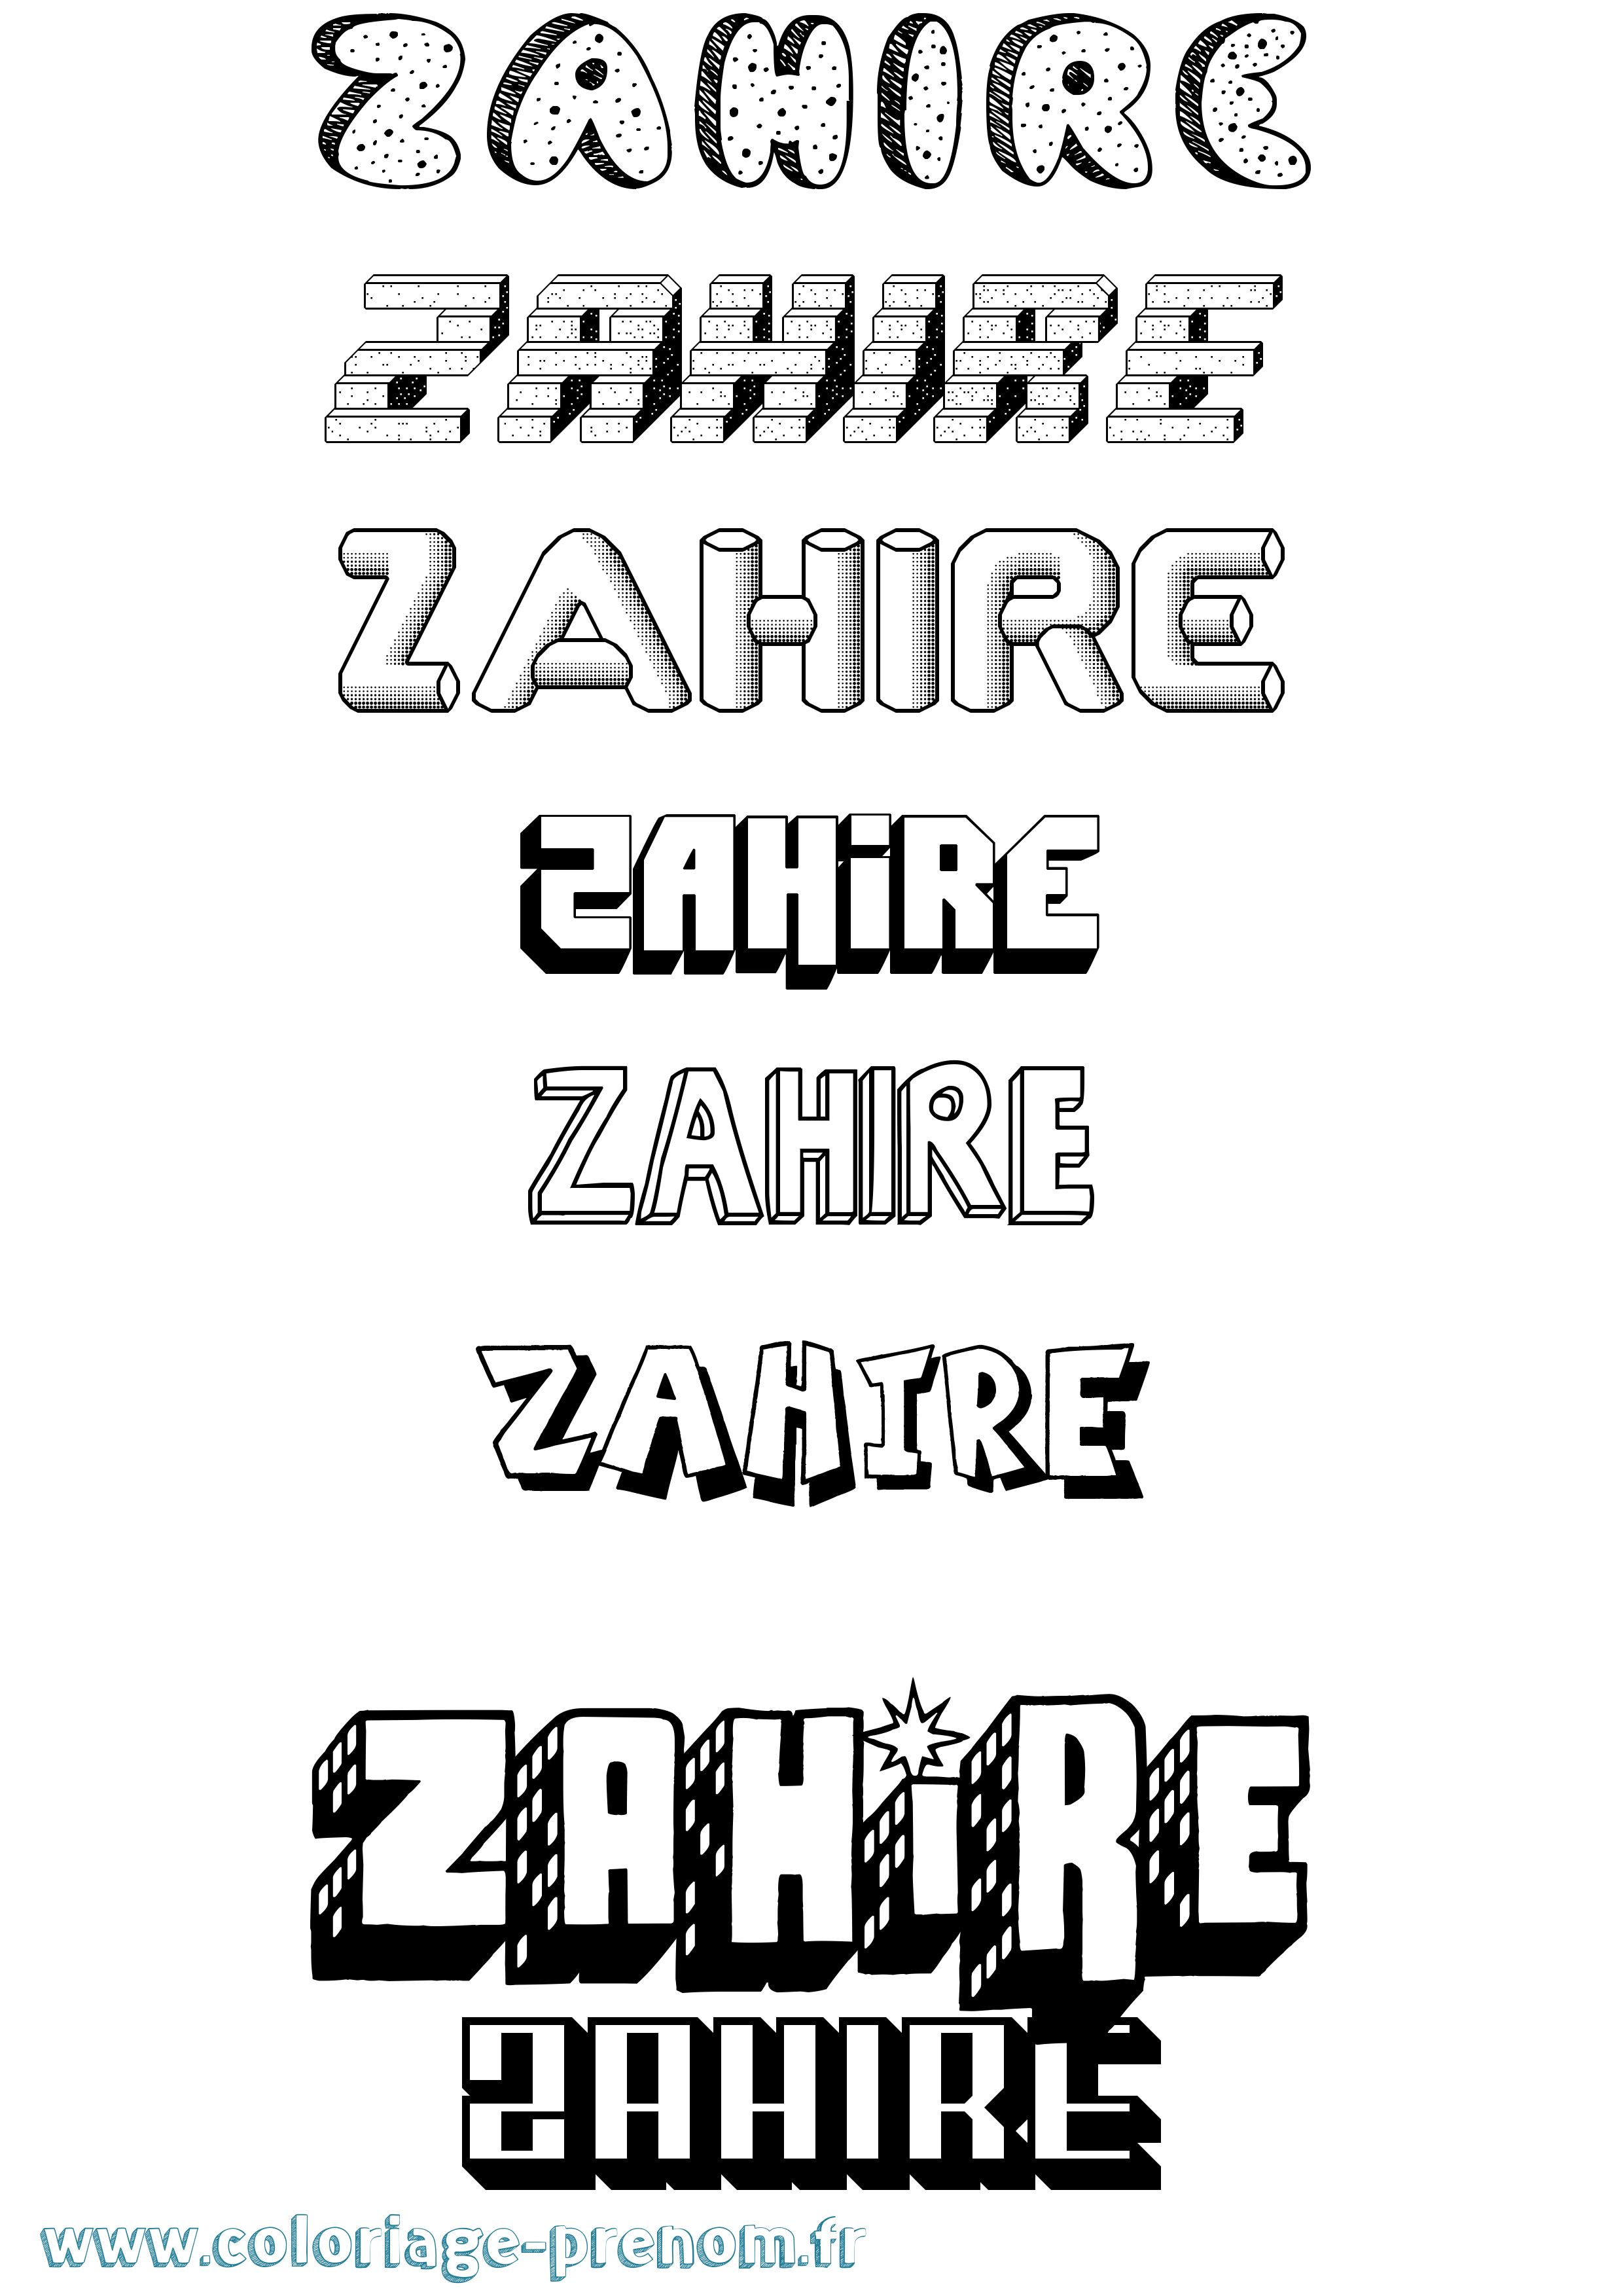 Coloriage prénom Zahire Effet 3D